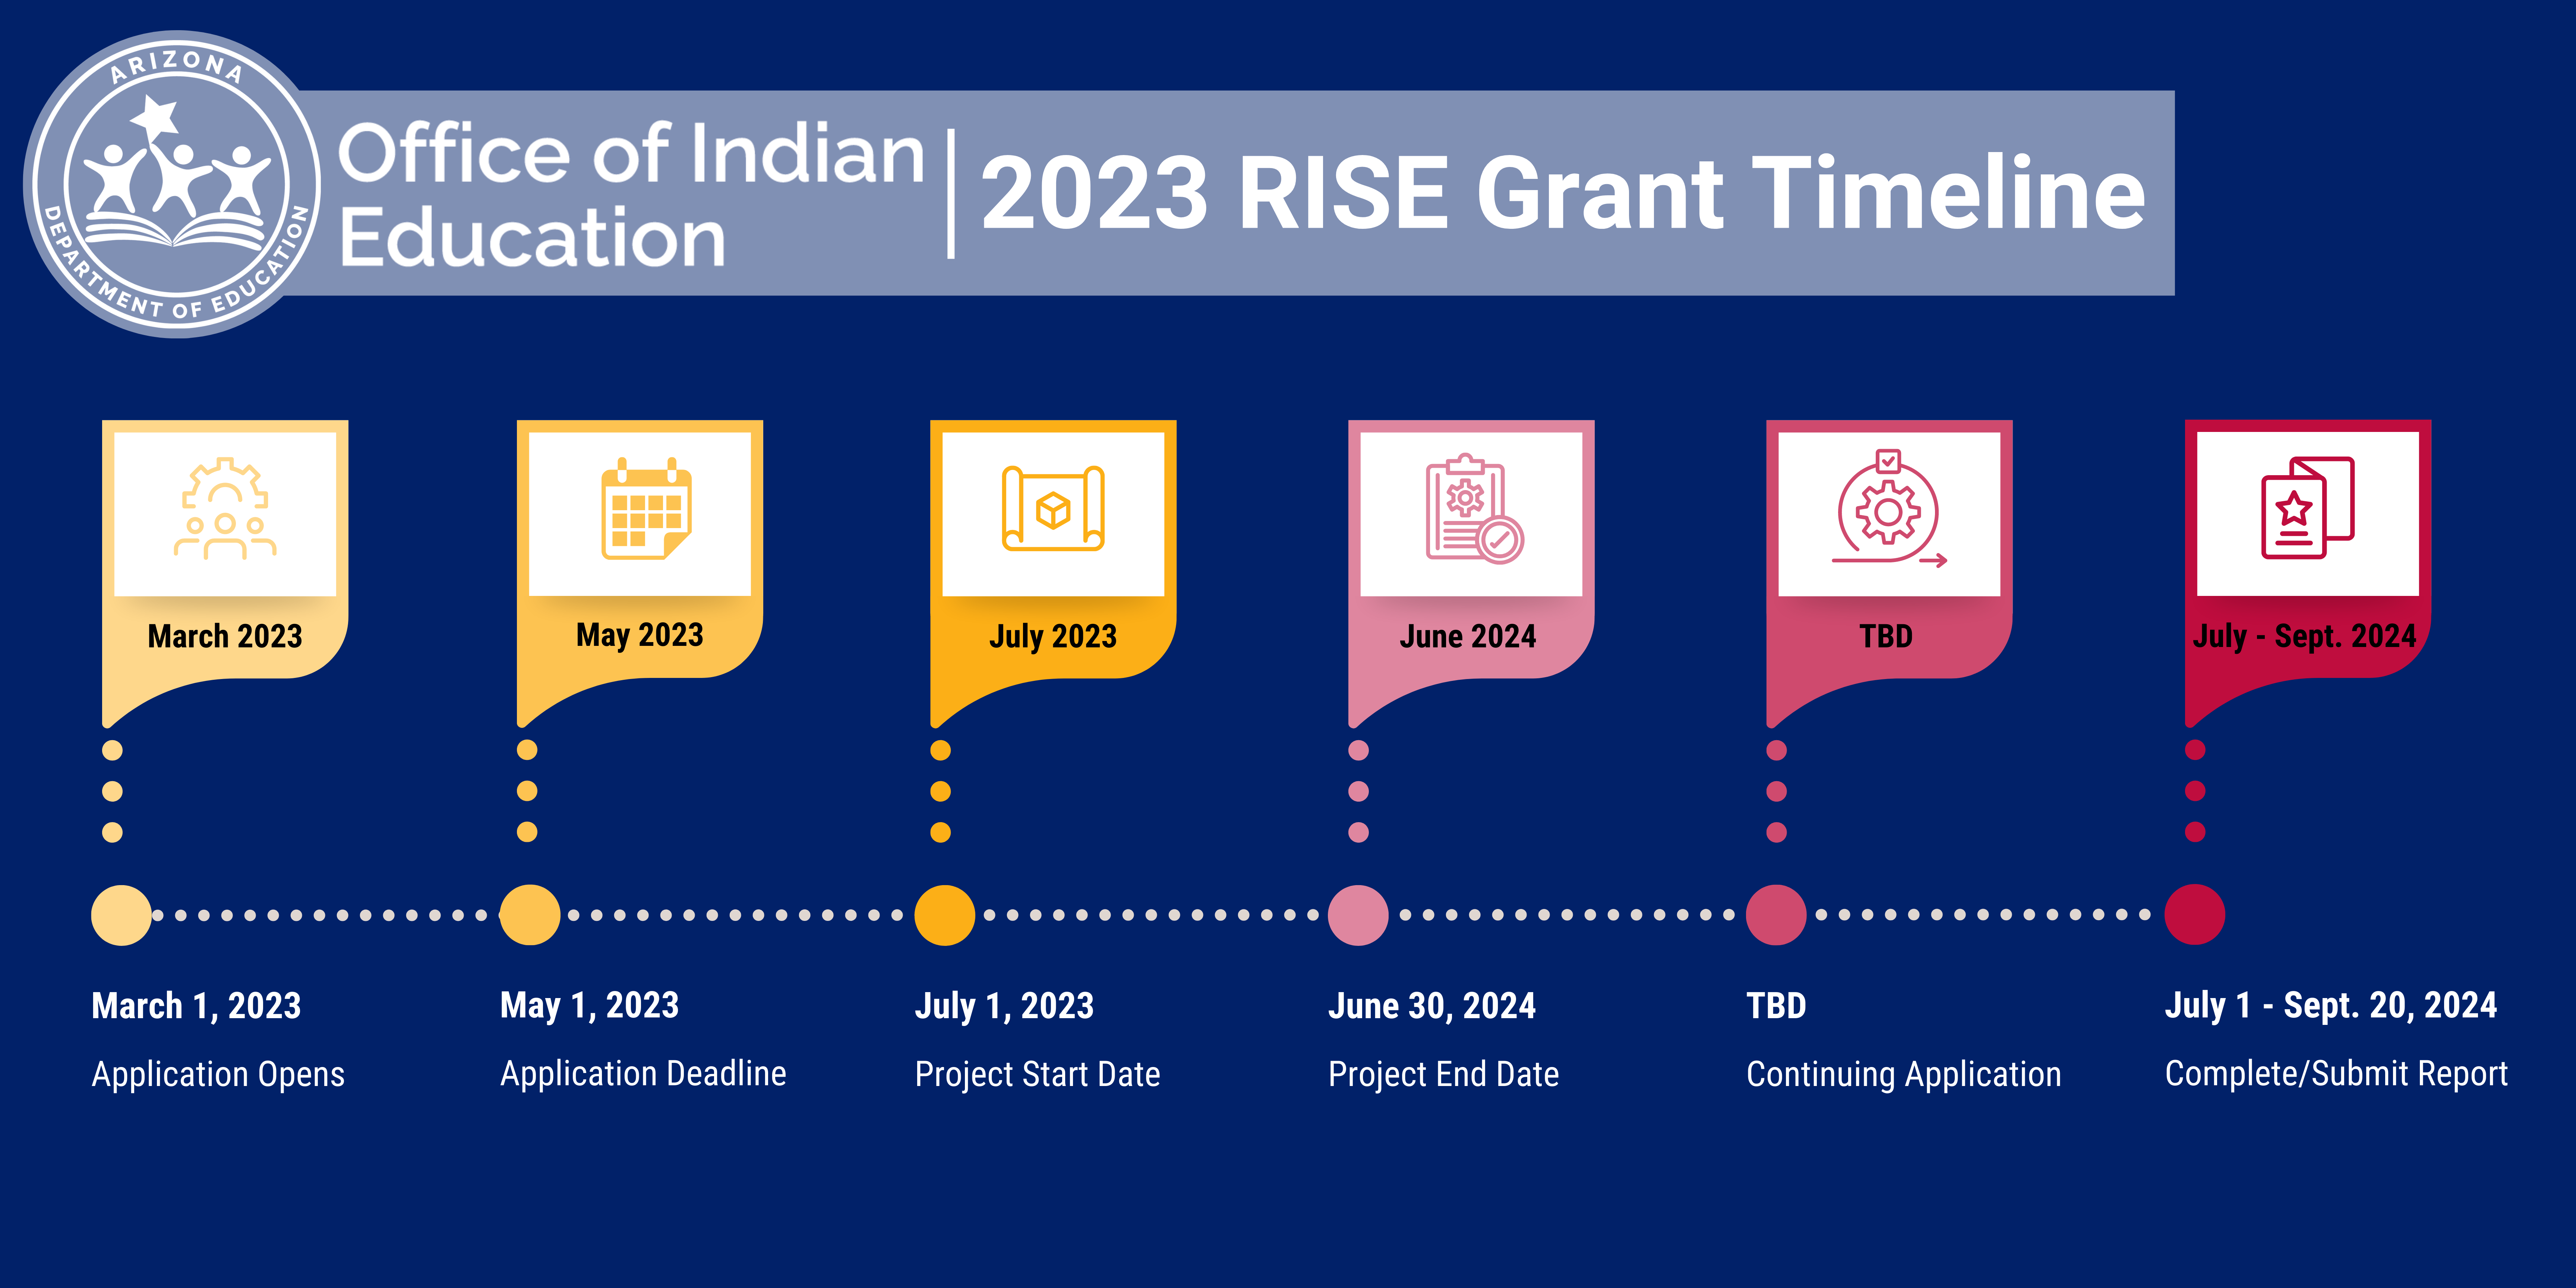 RISE Grant Timeline 2023